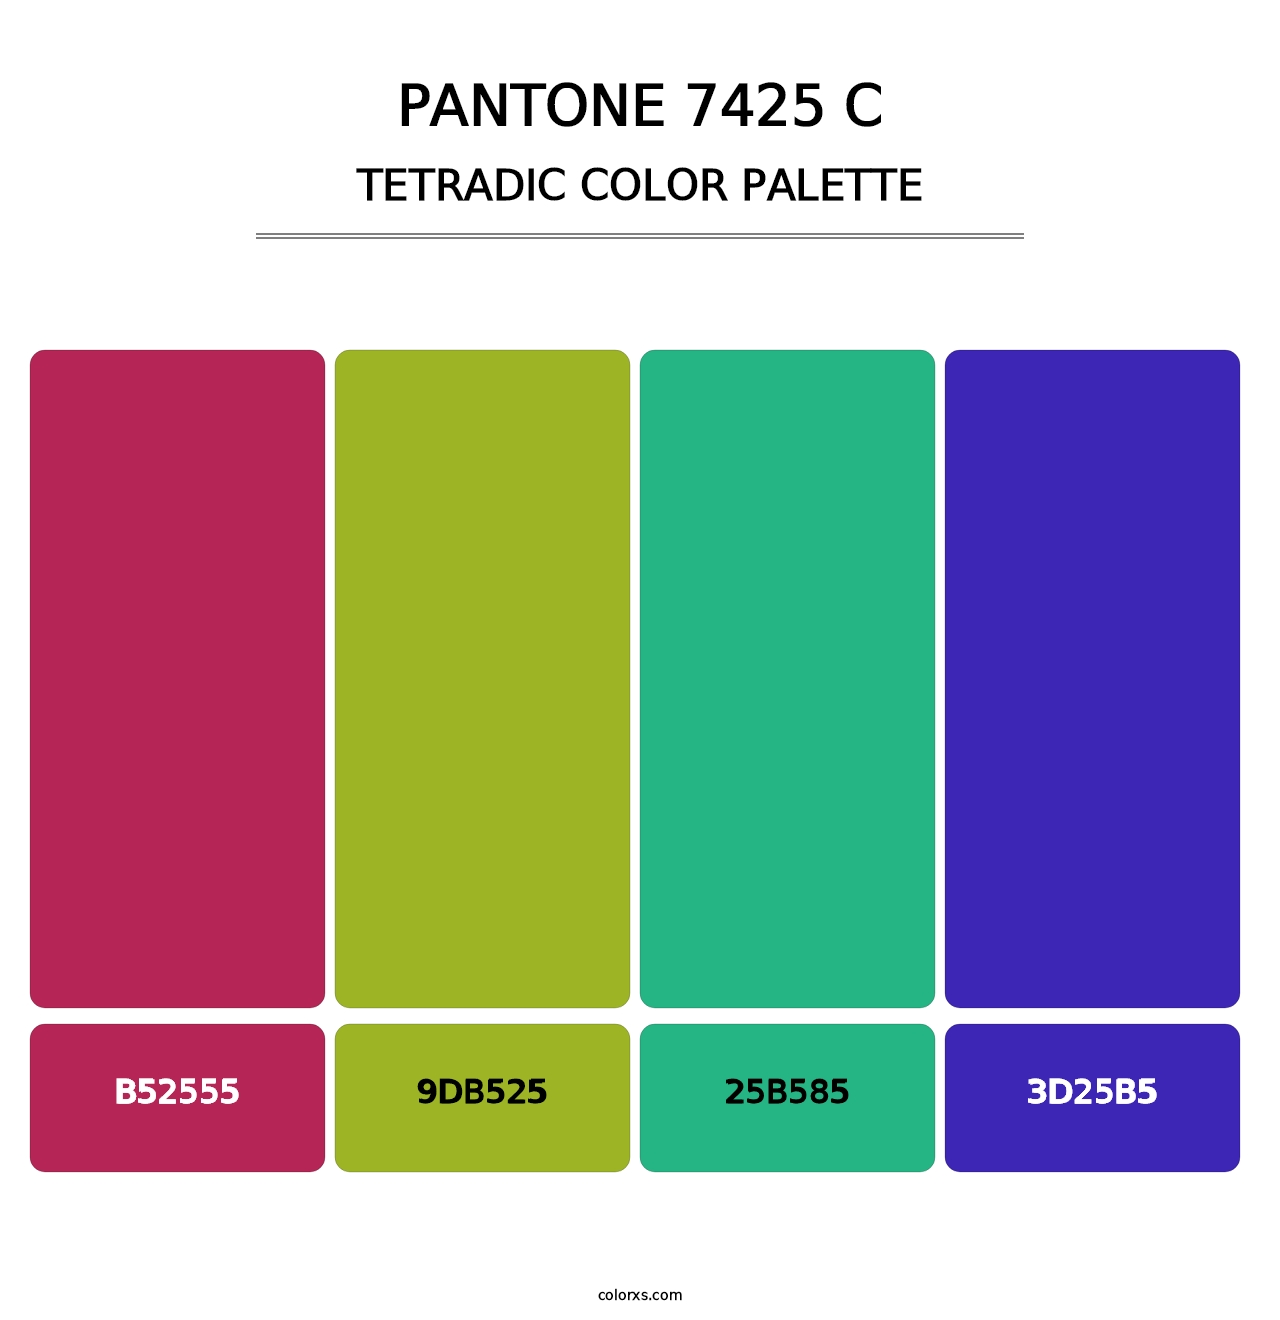 PANTONE 7425 C - Tetradic Color Palette